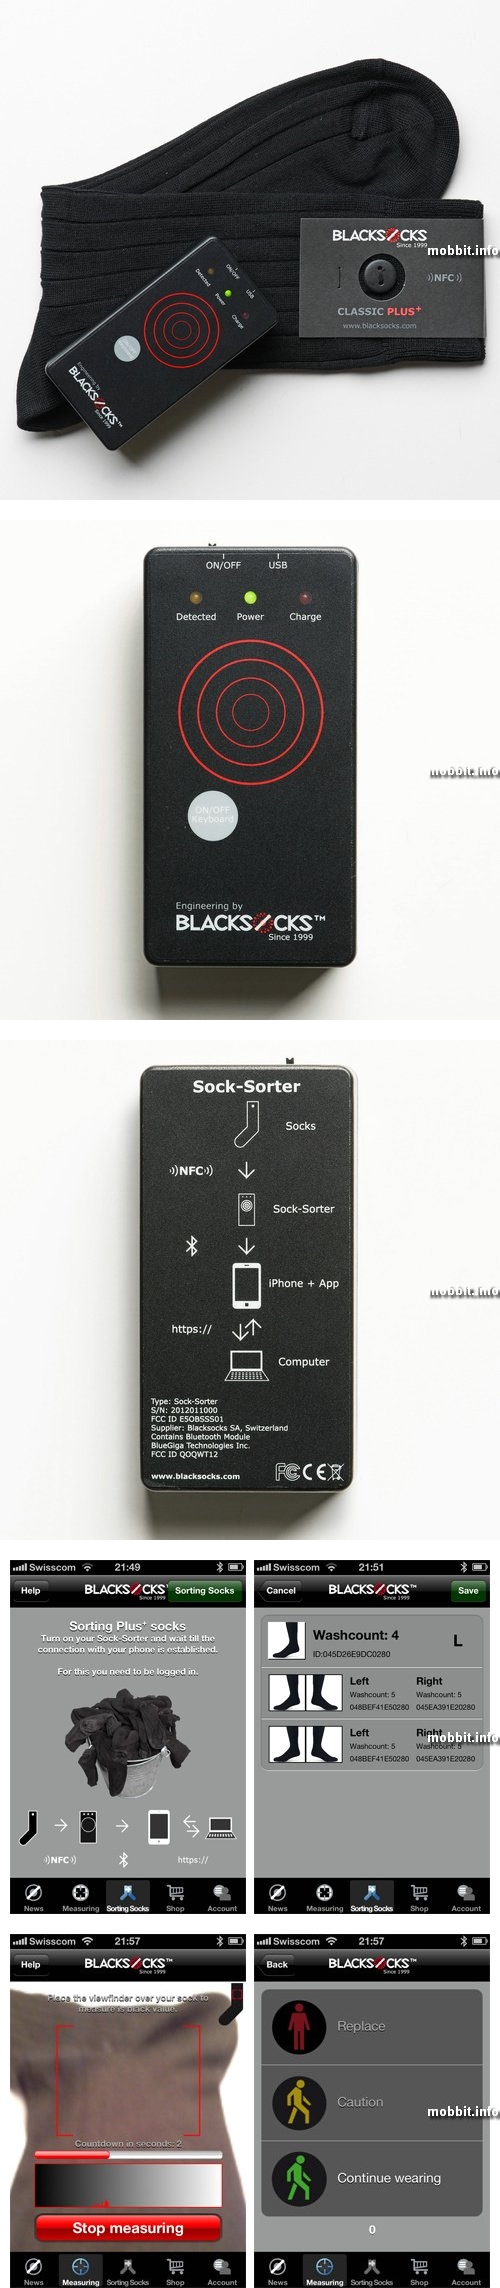 Smarter Socks